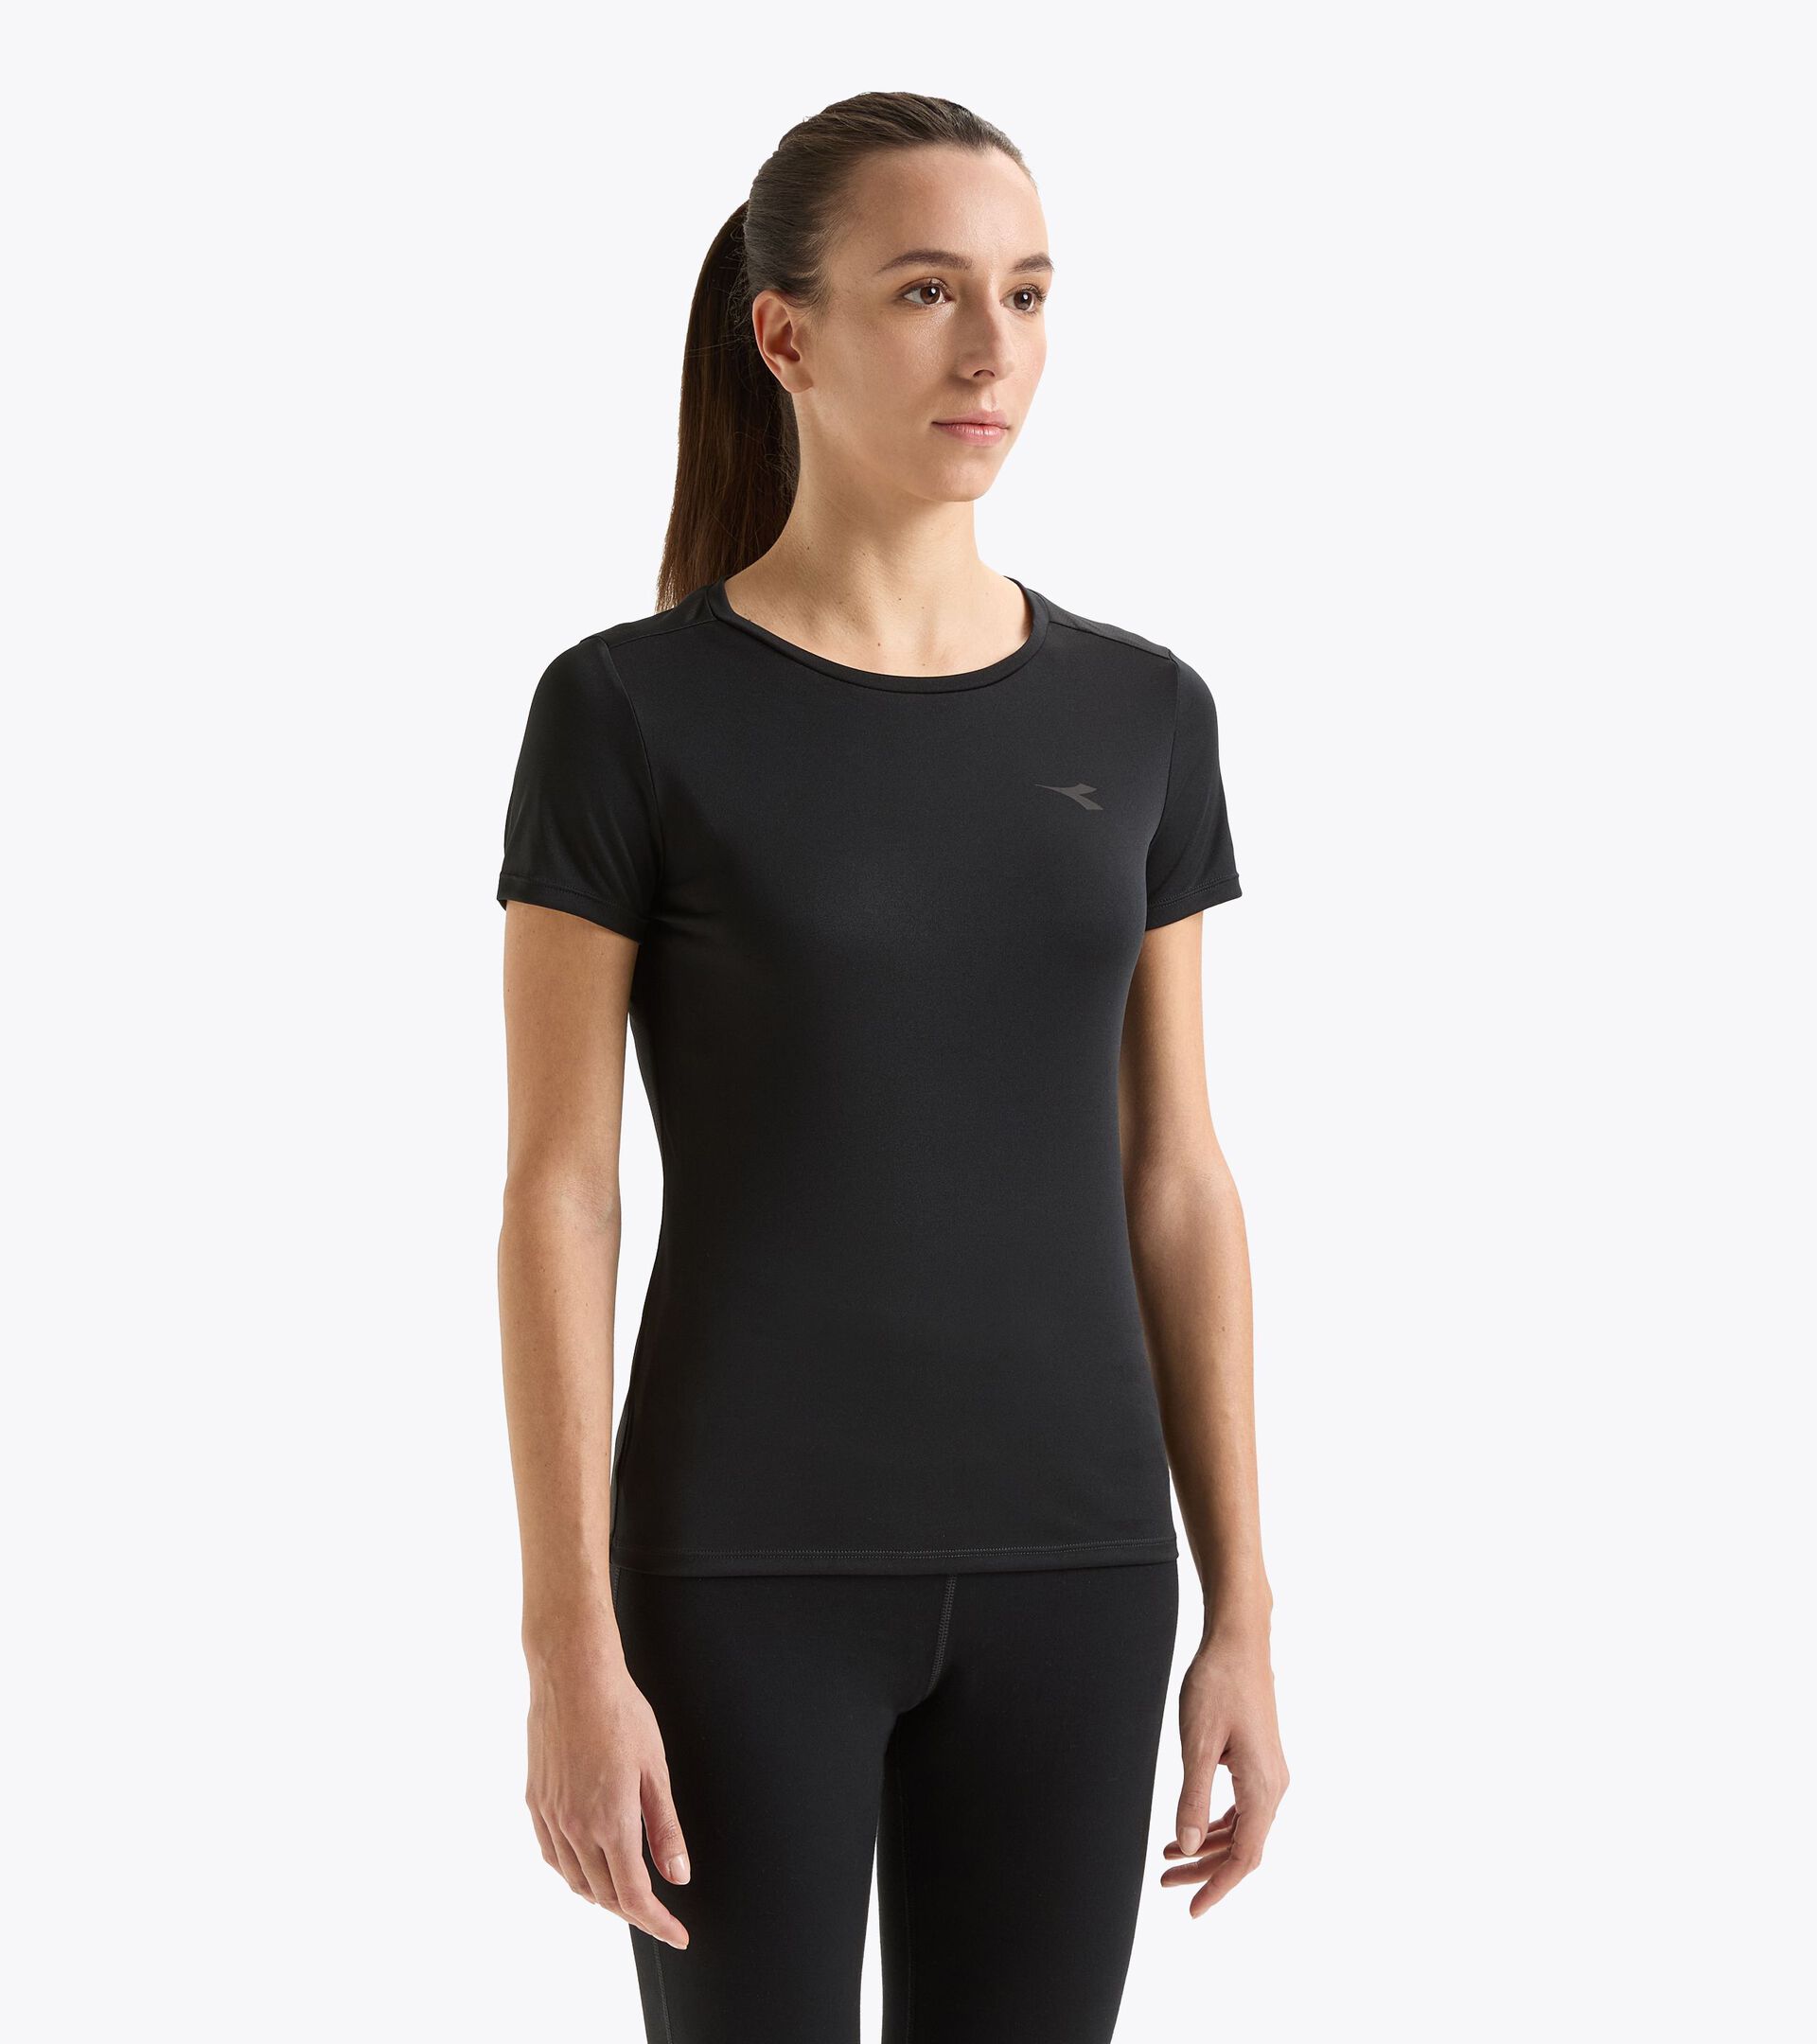 Camiseta deportiva - Mujer L. SS T-SHIRT RUN NEGRO - Diadora